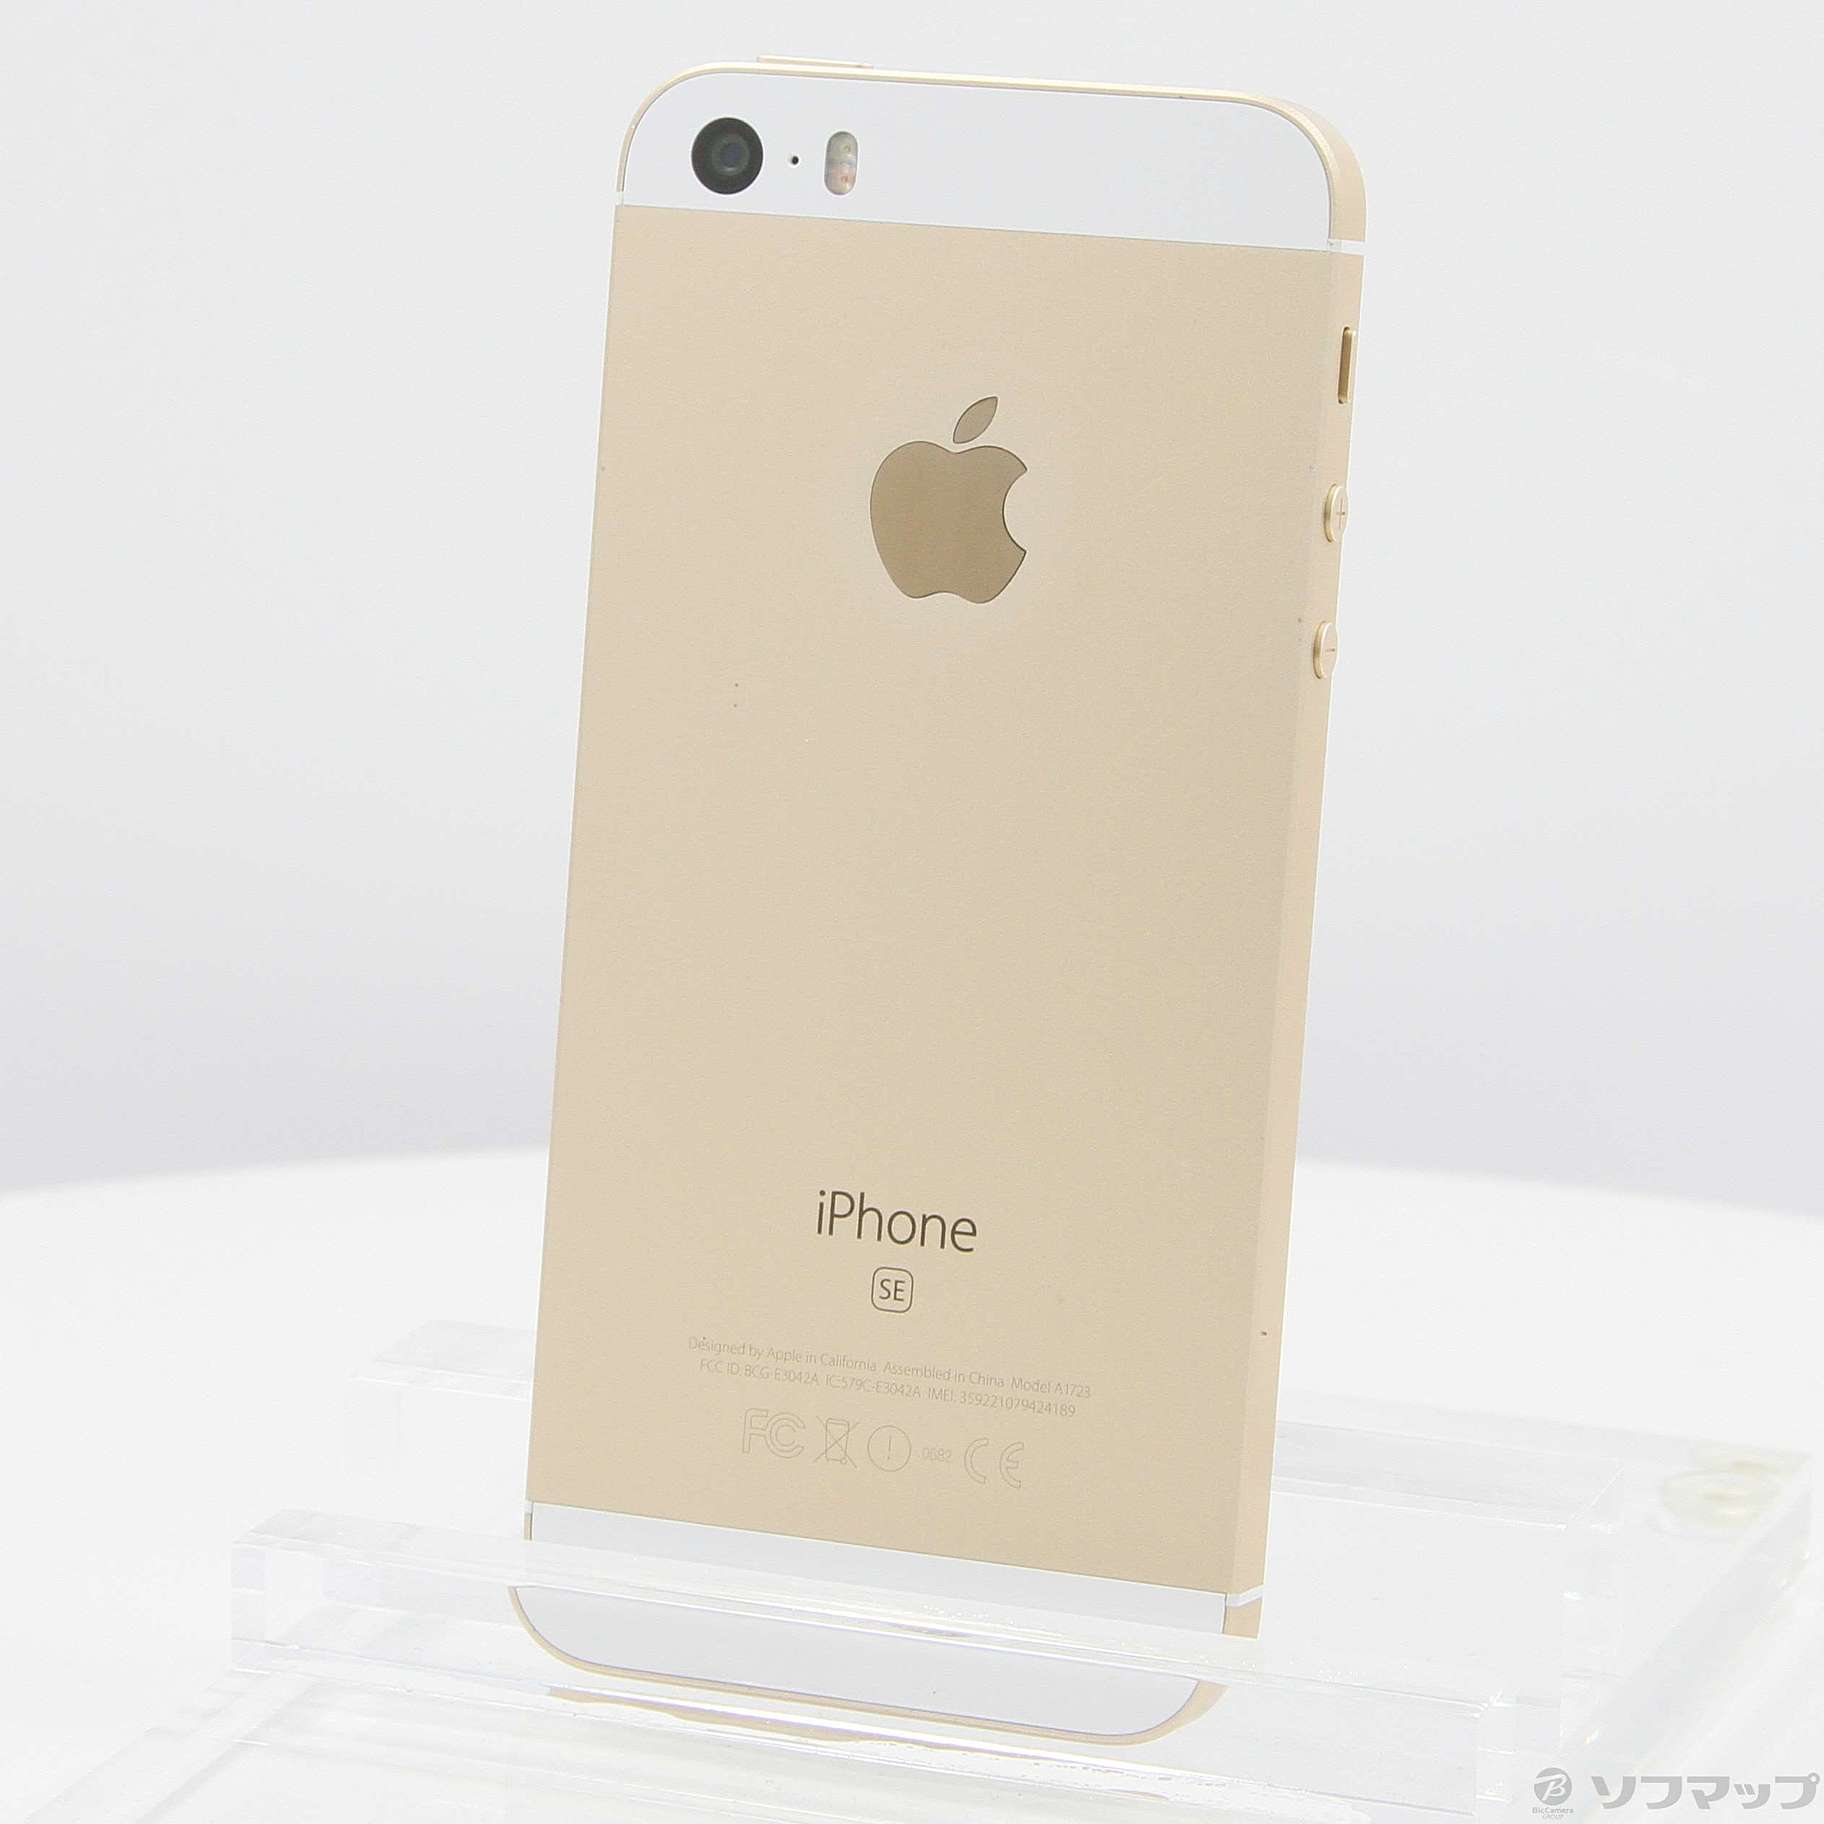 iPhone SE 64GB GOLD